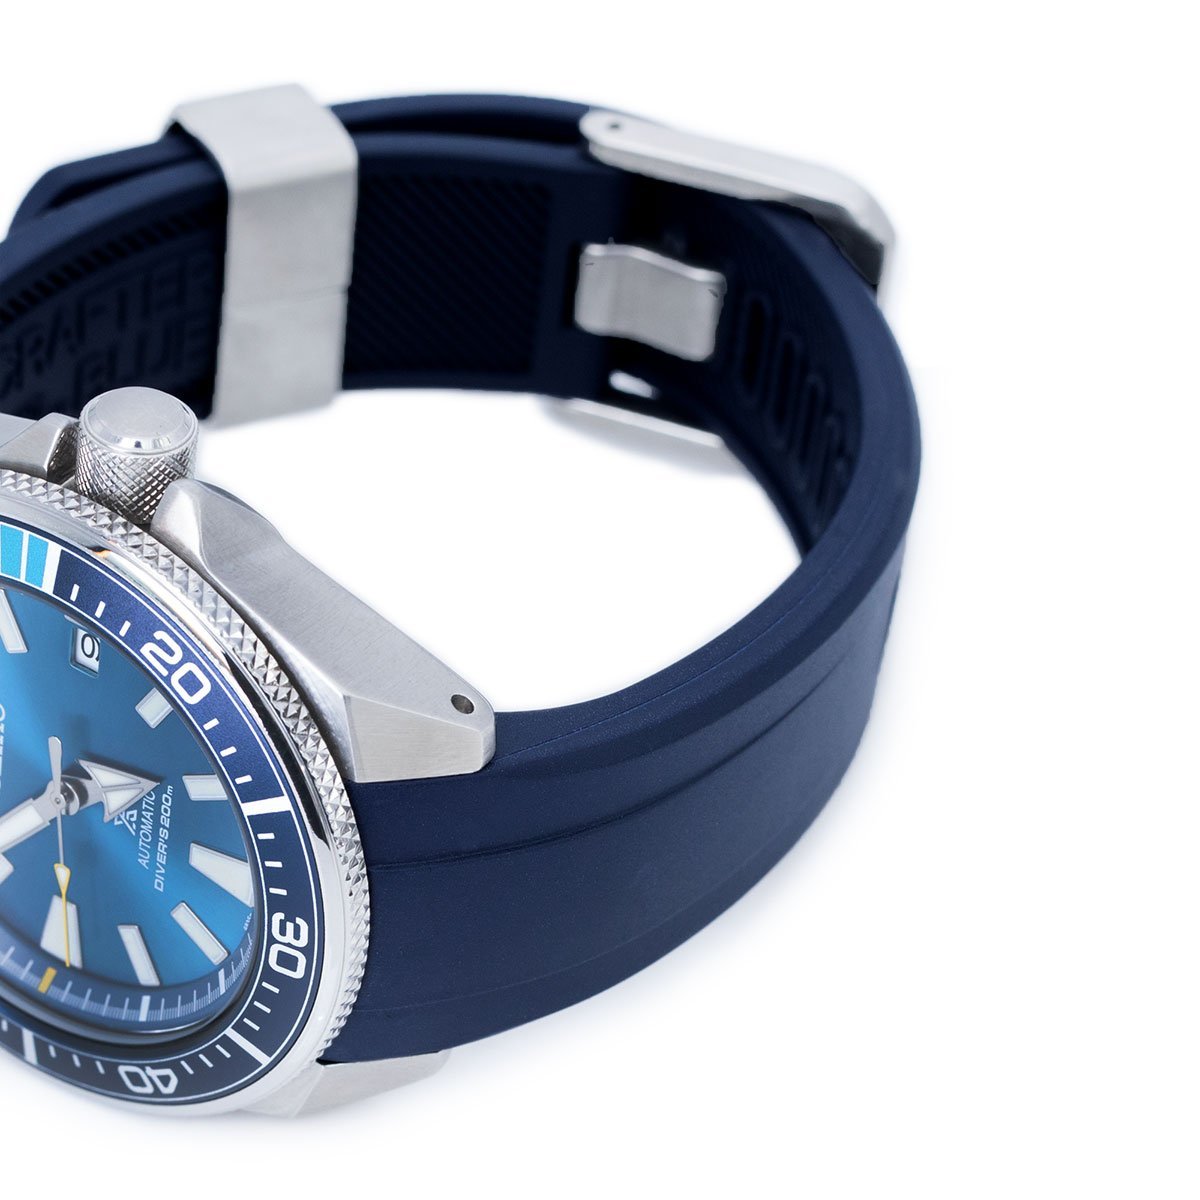 22mm Crafter Blue Dark Blue Rubber Curved Lug Watch Strap for Seiko Samurai SRPB51 Strapcode Watch Bands